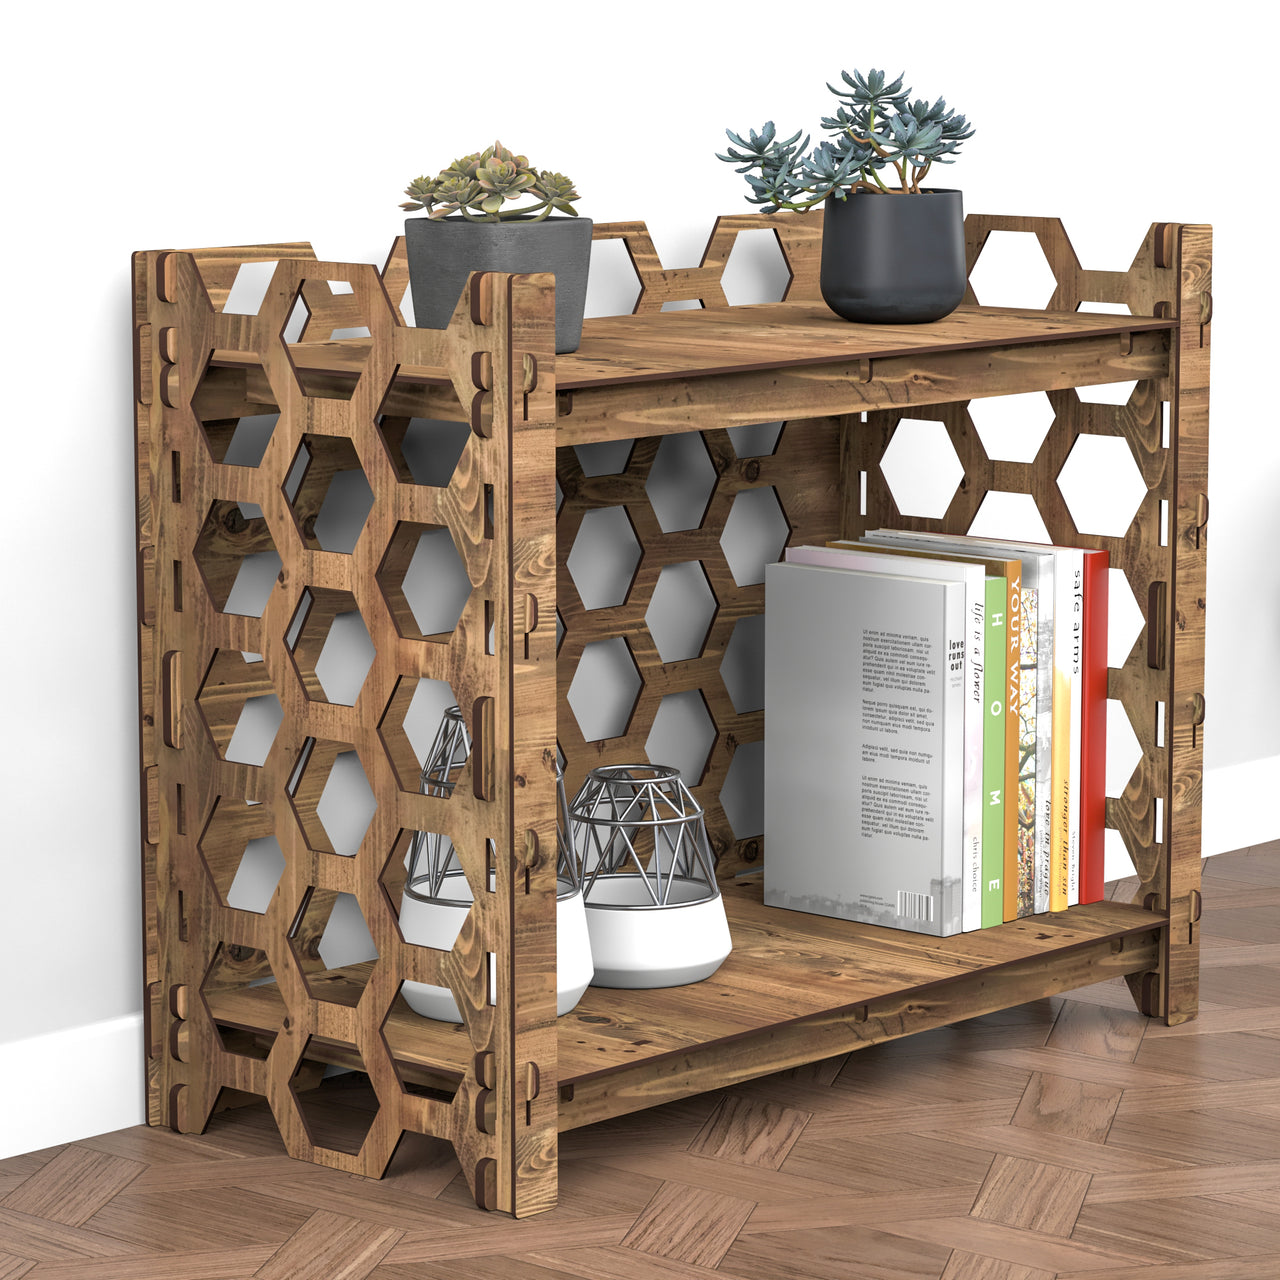 Honeycomb LUX 2-tier Bookshelf Bookcase Shelving Unit